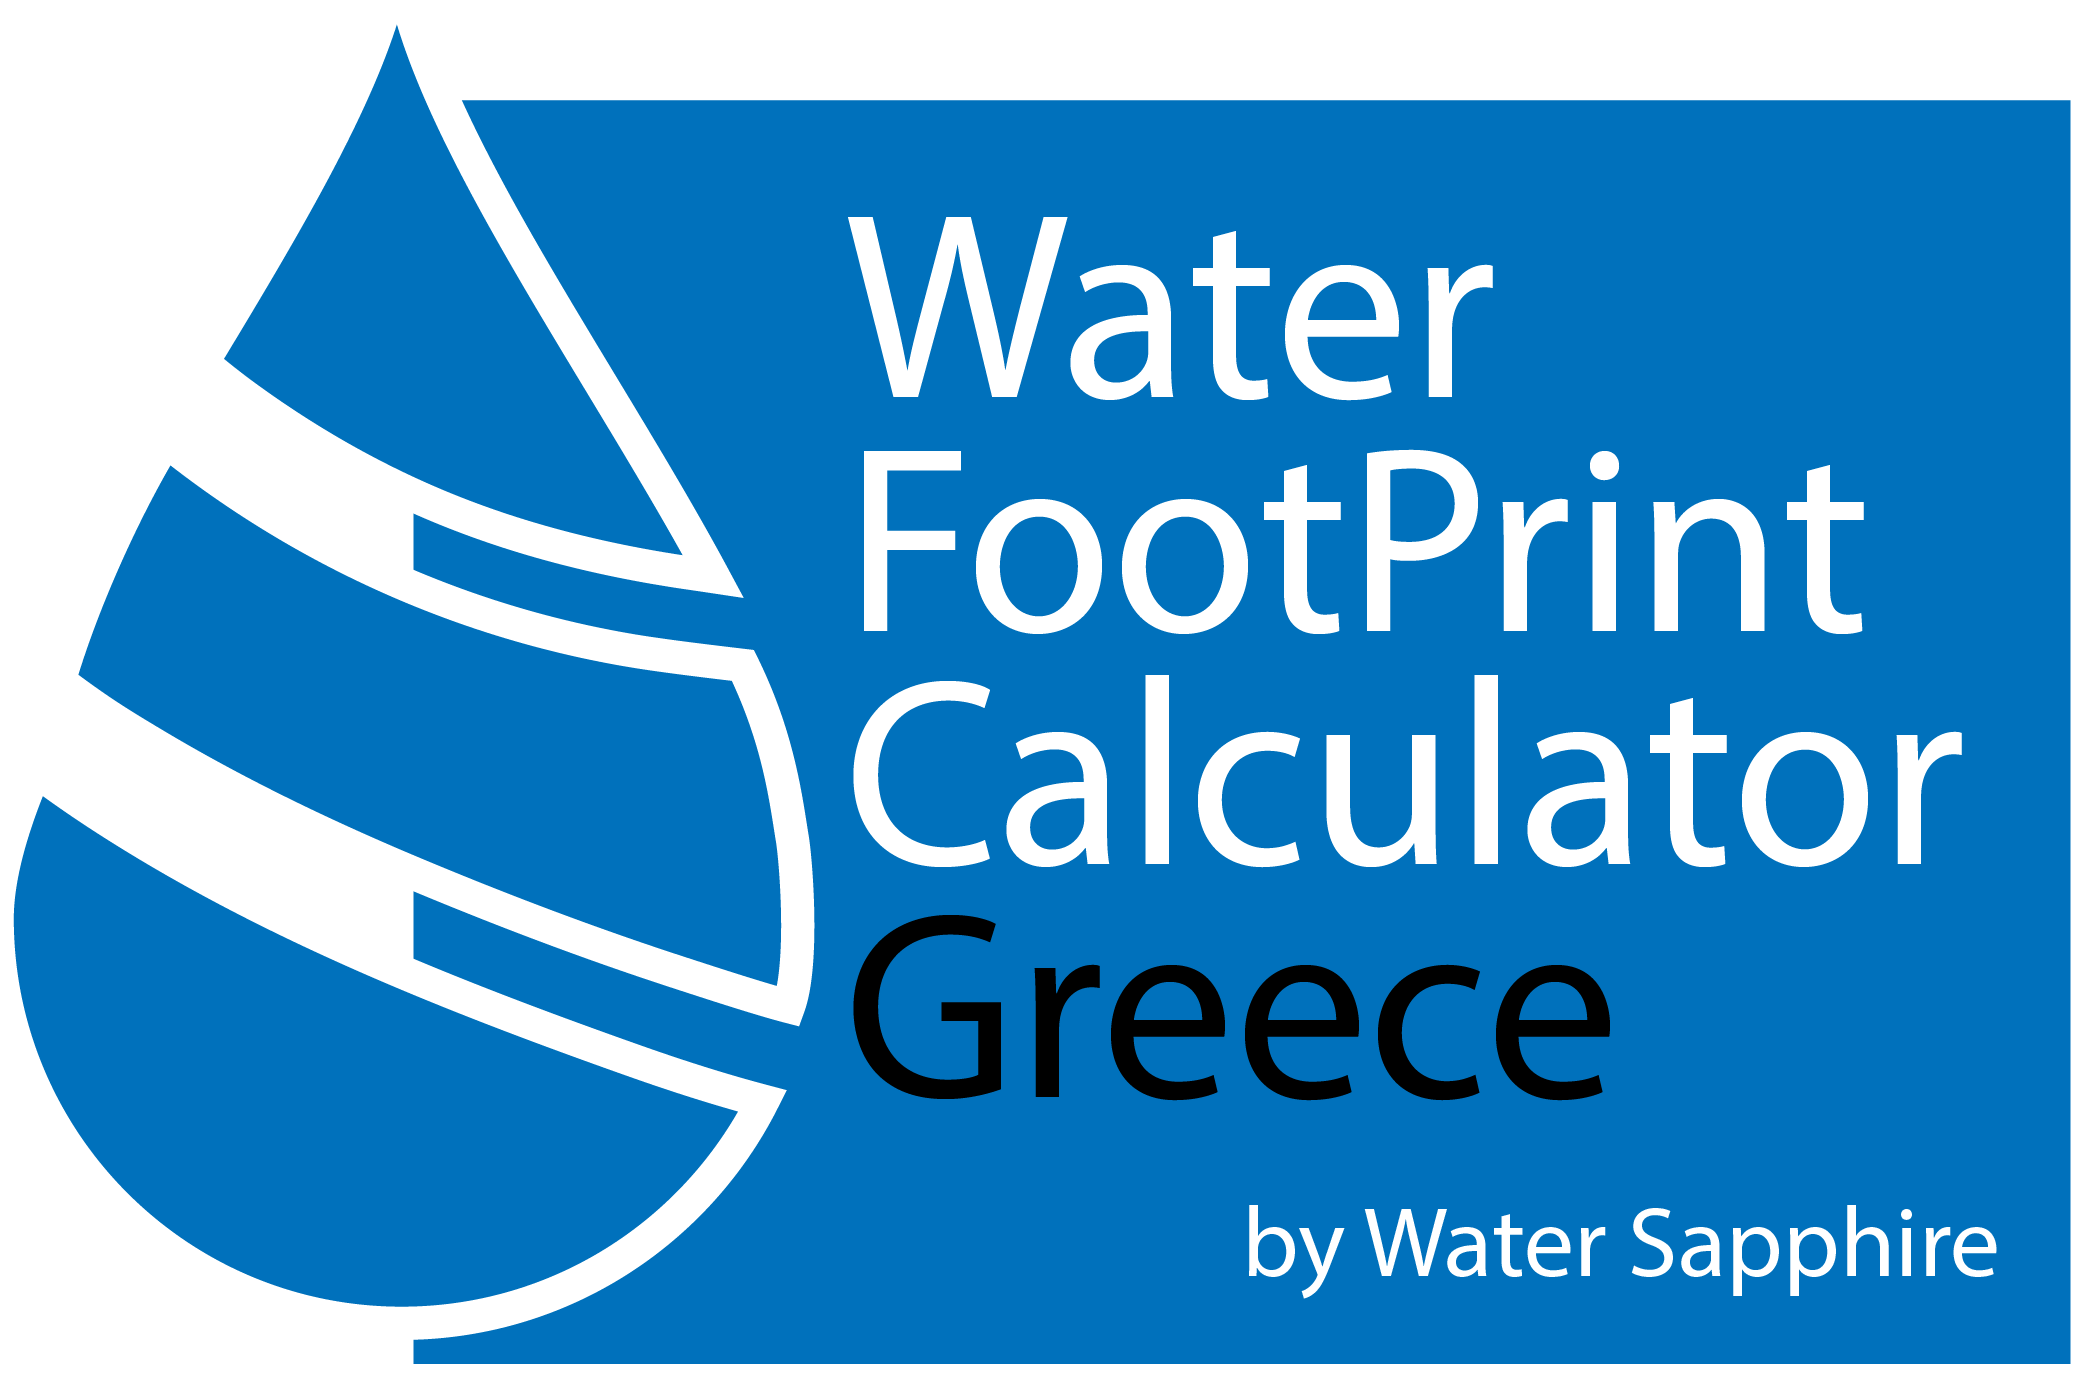 Water Footprint Calculator Greece